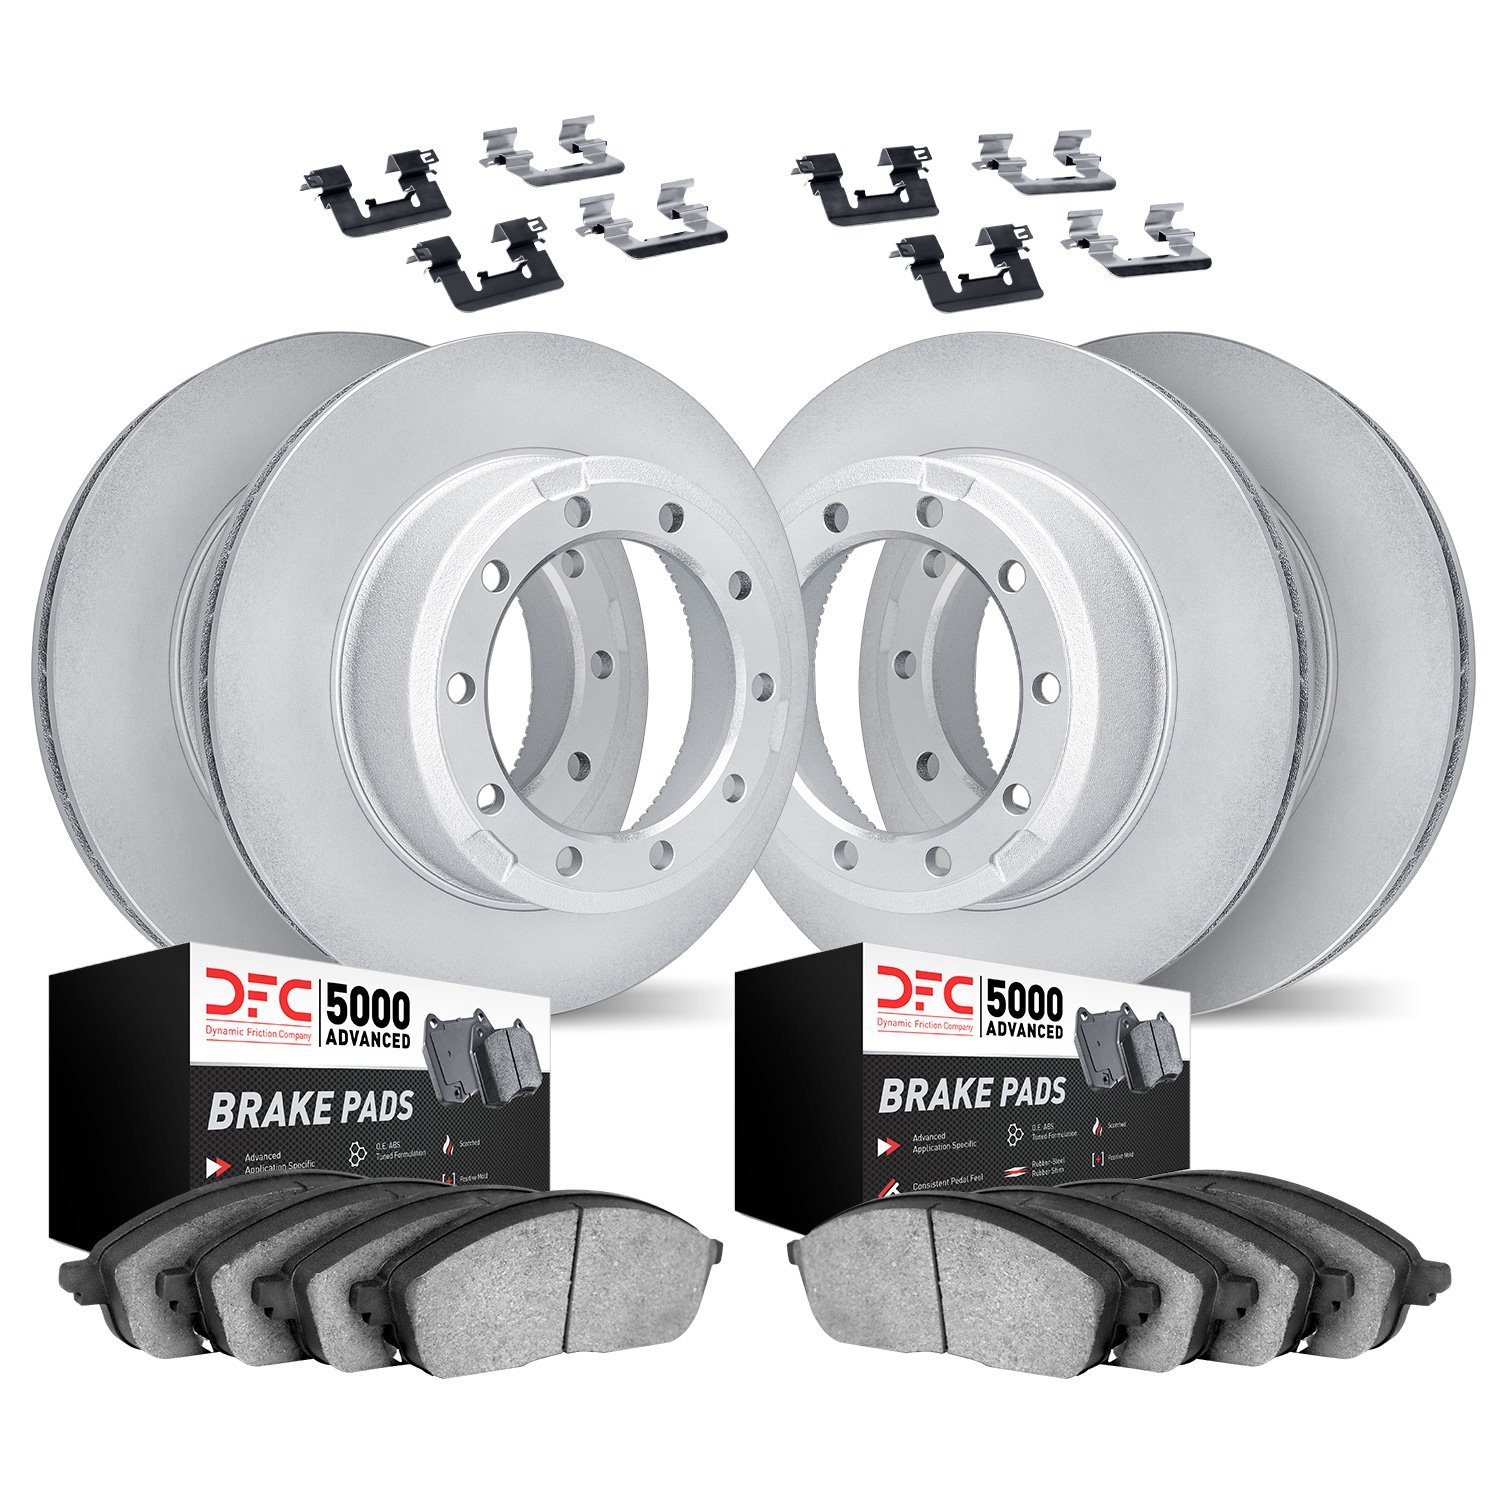 4514-54315 Geospec Brake Rotors w/5000 Advanced Brake Pads Kit & Hardware, Fits Select Multiple Makes/Models, Position: Front an